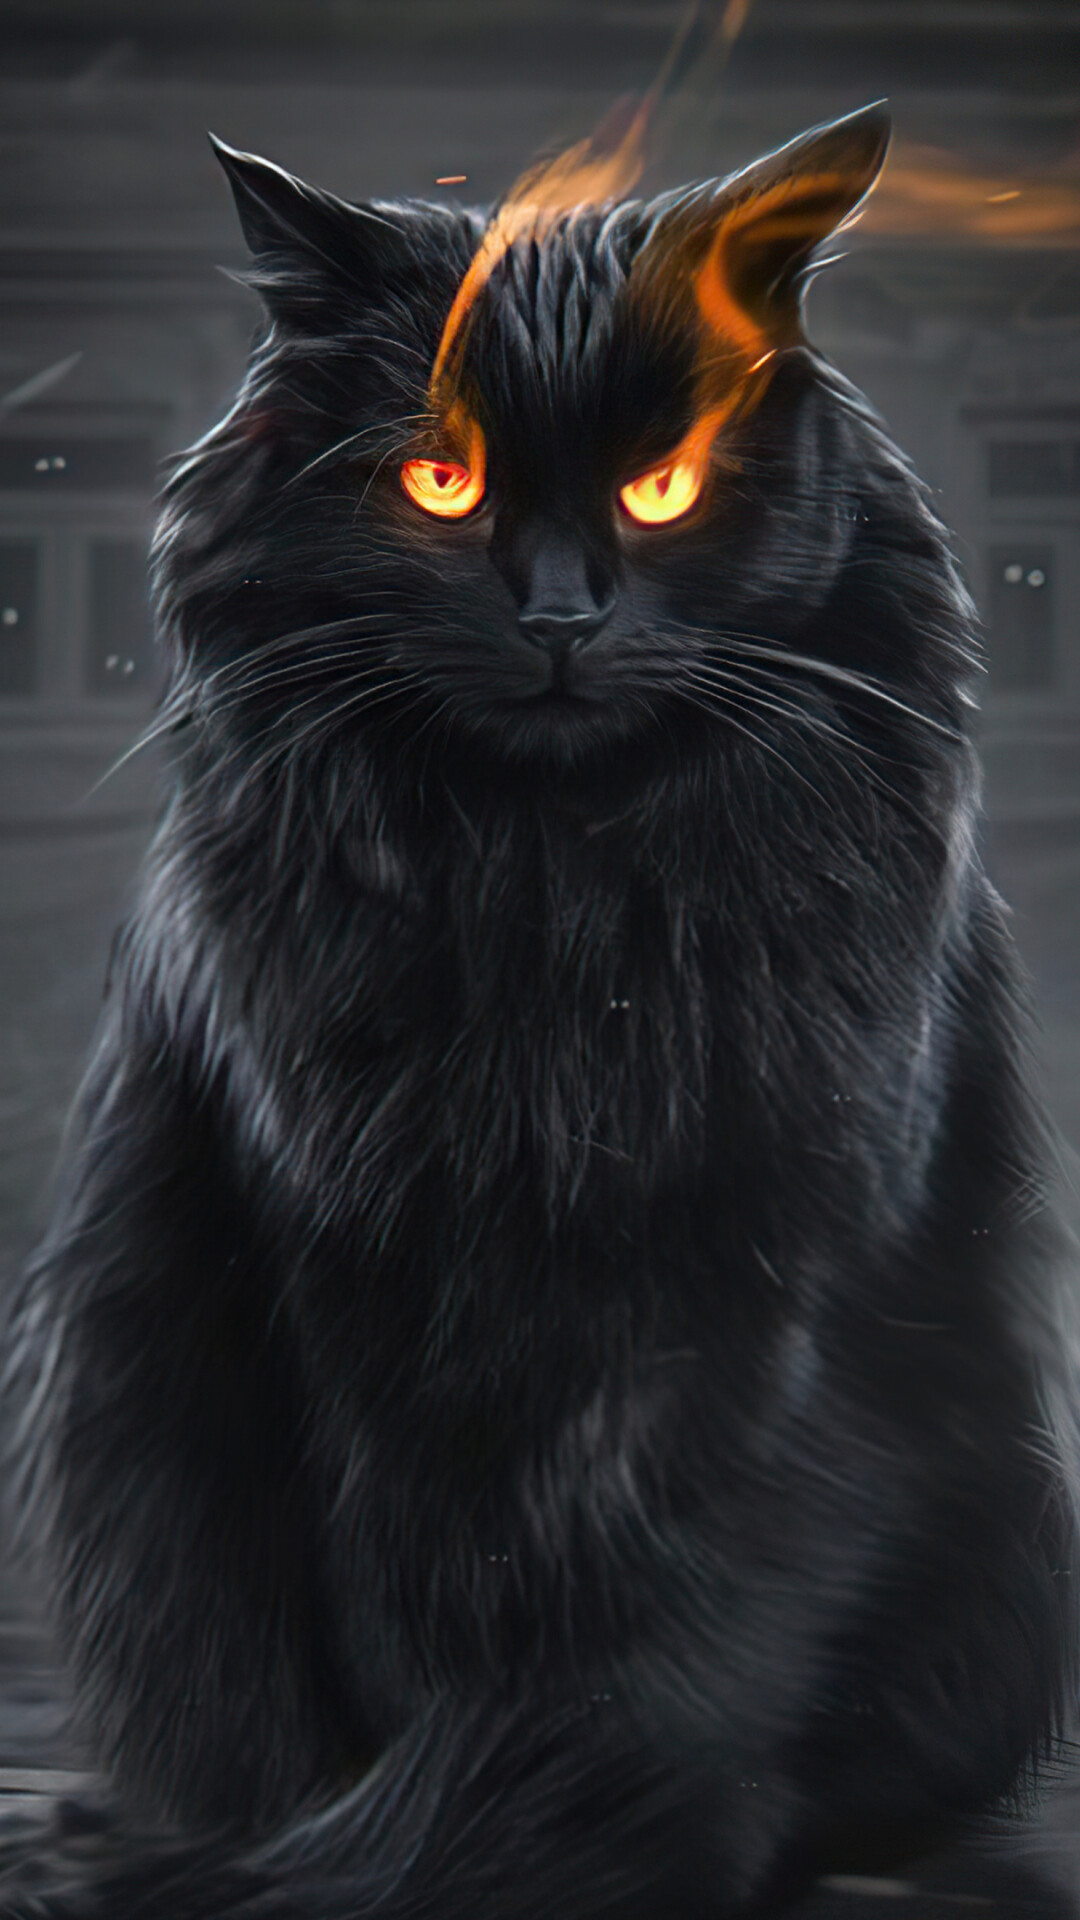 Black cat with fire eyes, Striking contrast, 4K resolution, Fiery presence, 1080x1920 Full HD Phone